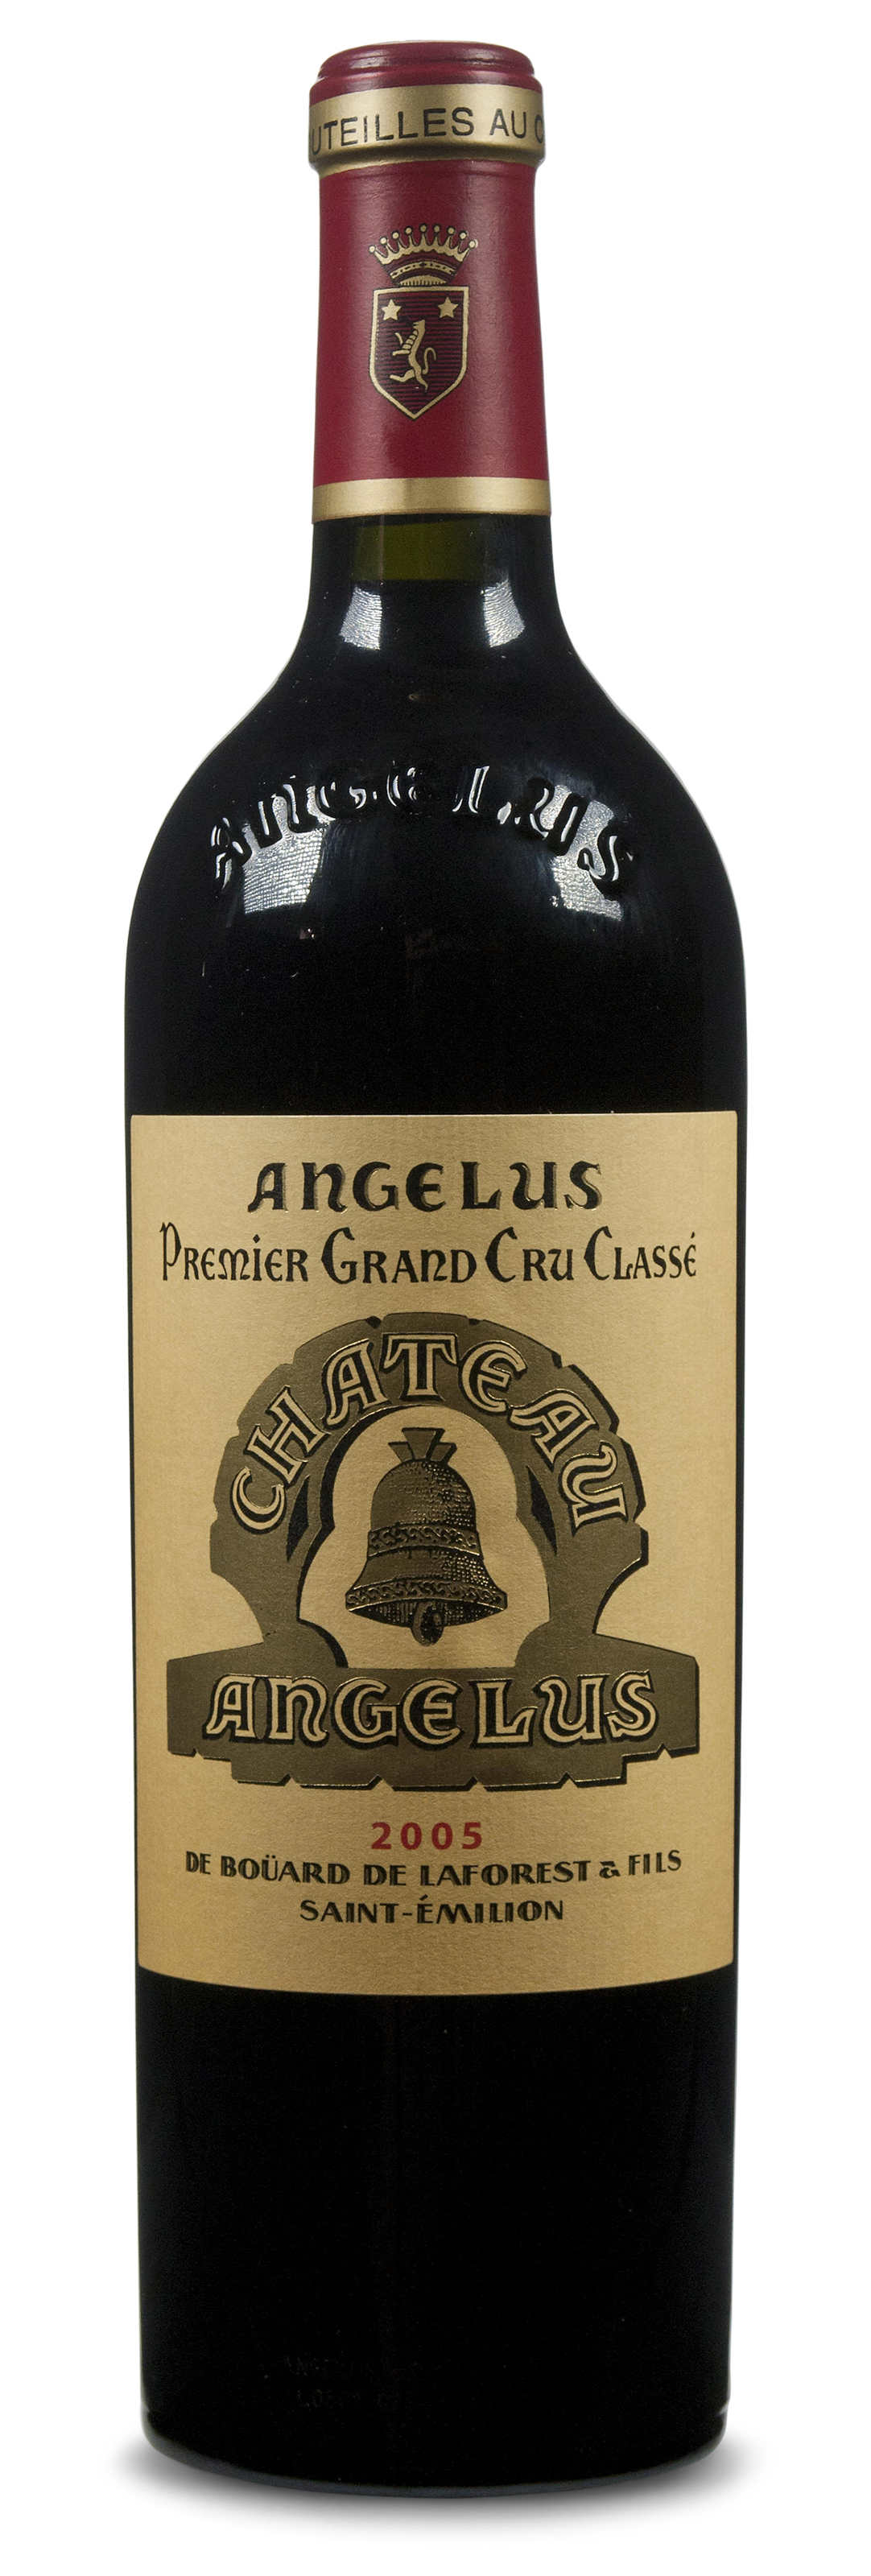 Chteau Anglus - Angelus Grand Cru Class 2011 (750ml)